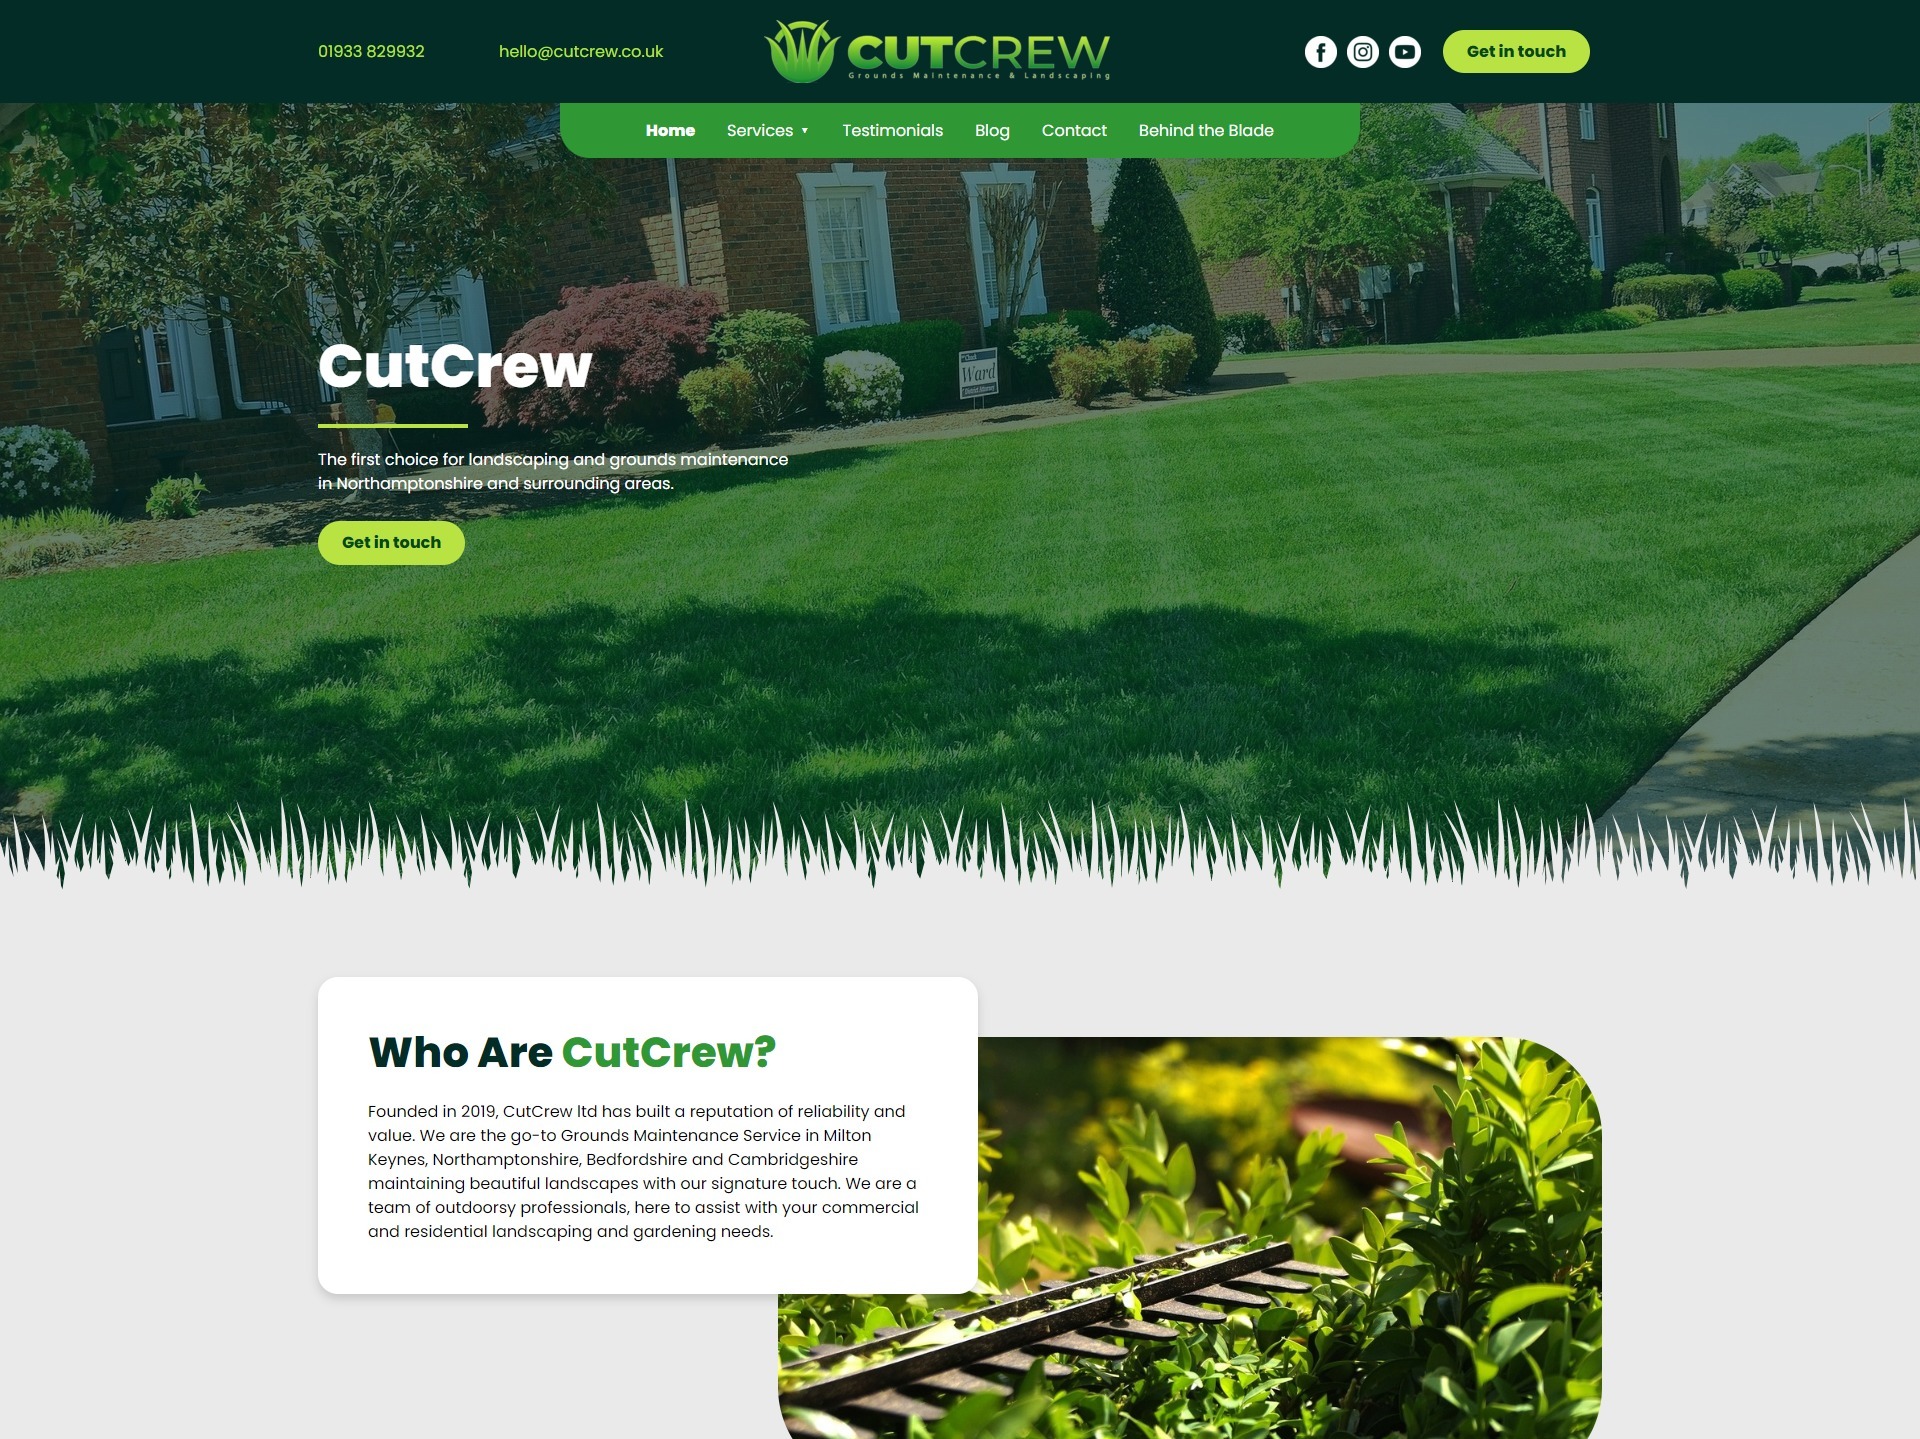 The redesign of CutCrew